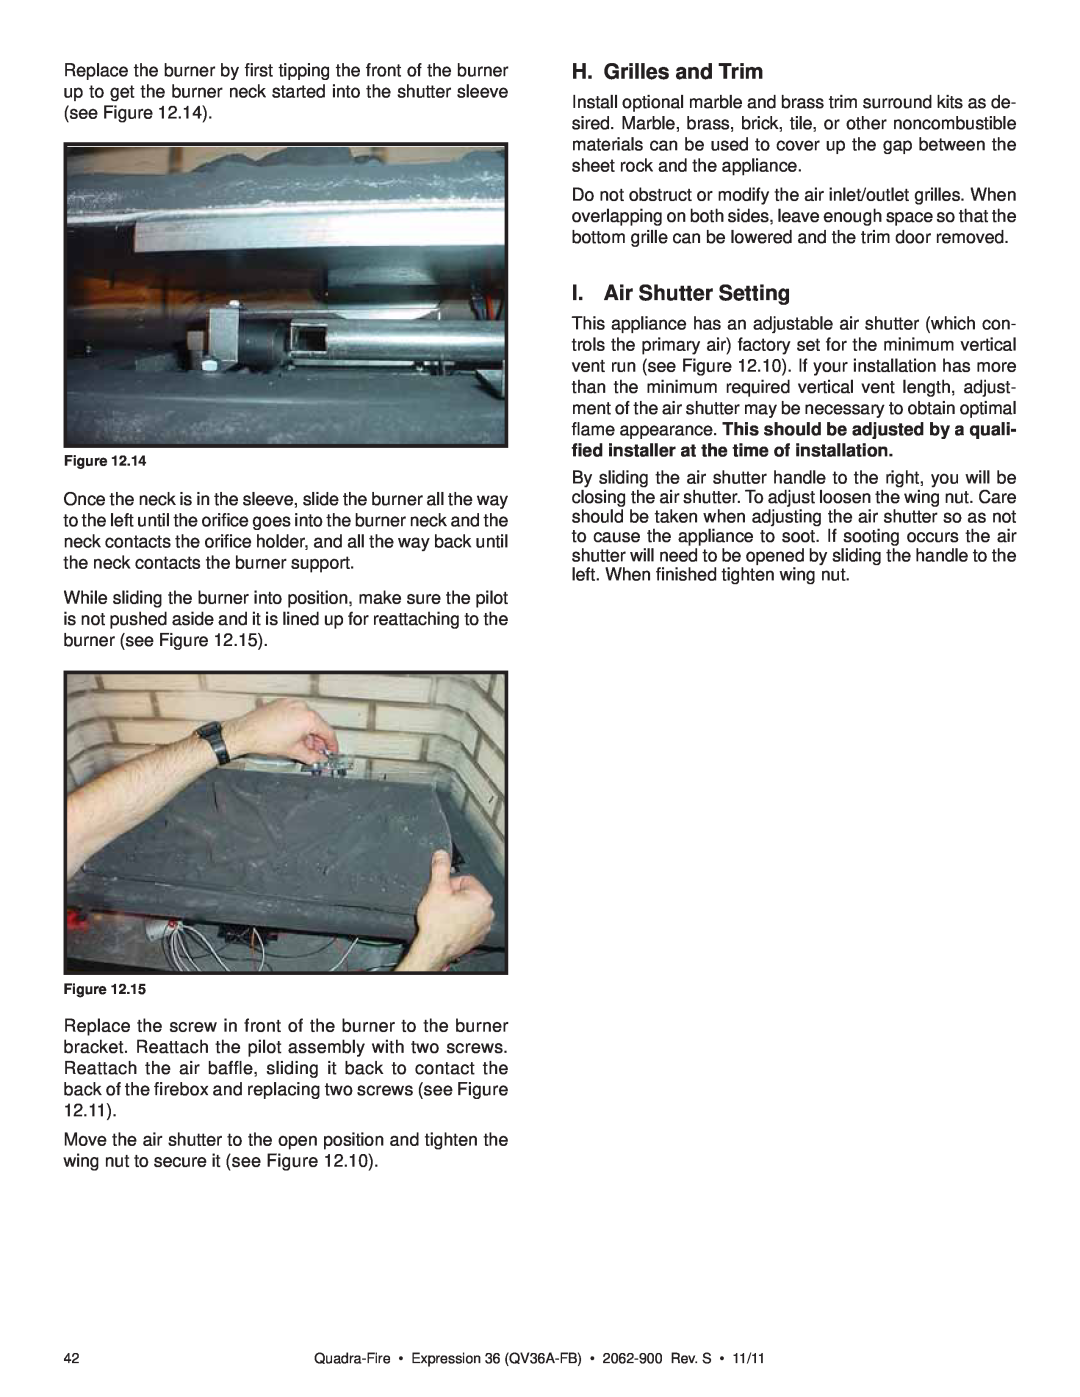 Quadra-Fire QV36A-FB owner manual H. Grilles and Trim, I. Air Shutter Setting 